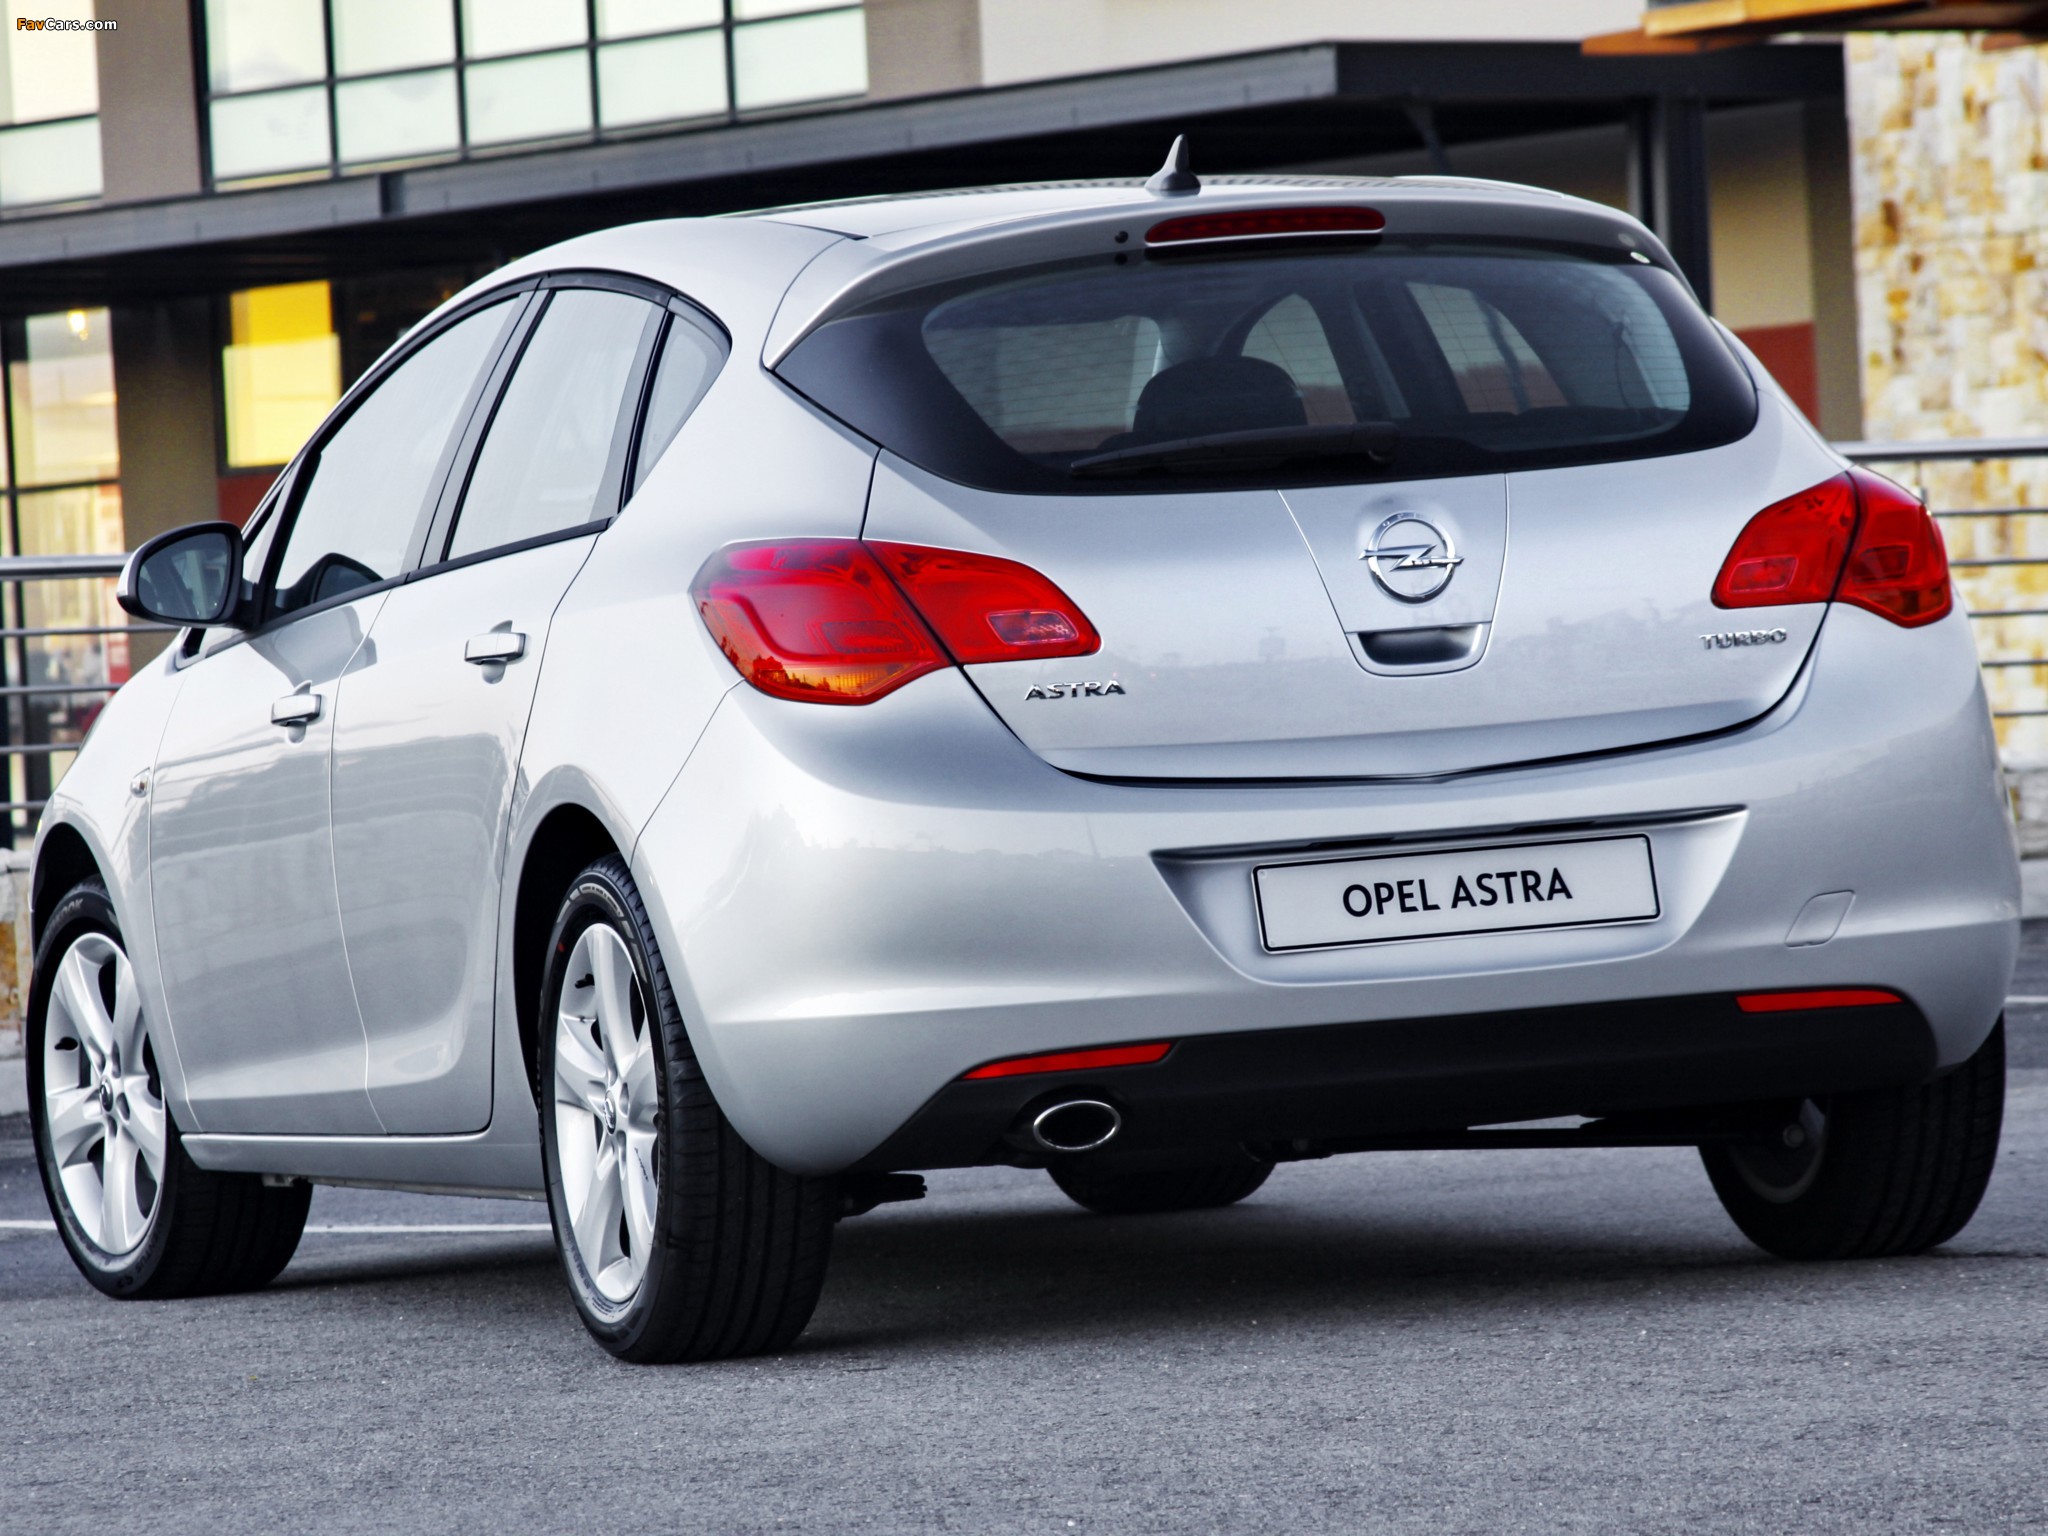 Opel Astra Hatchback 2012